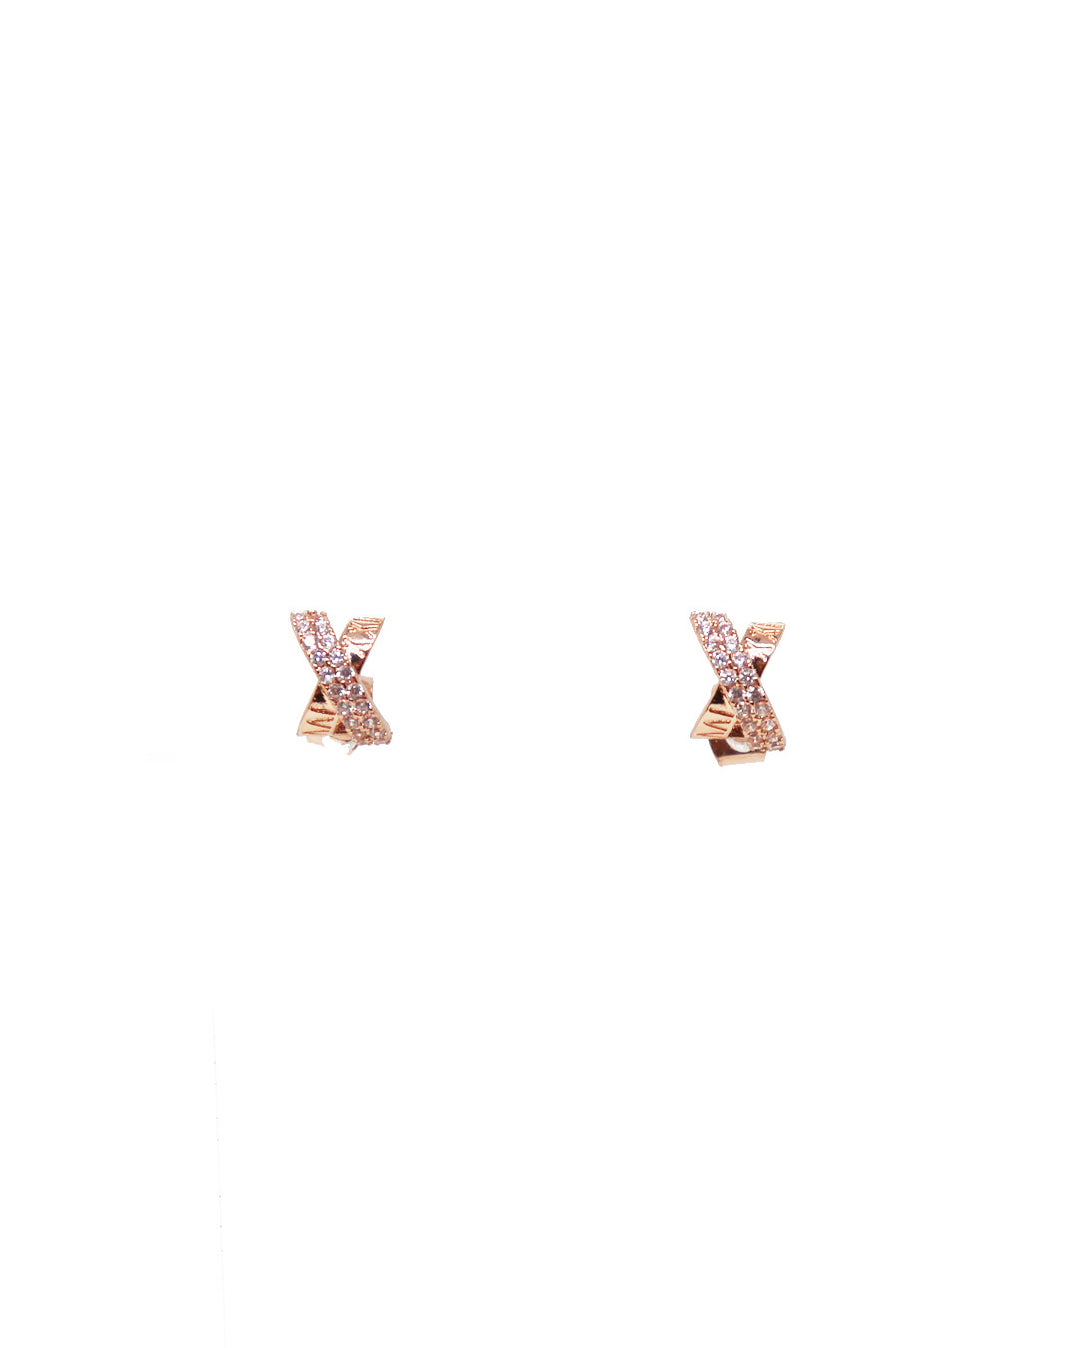 Petite Rose Gold Crisscross Stud Earrings - Gabrielle's Biloxi